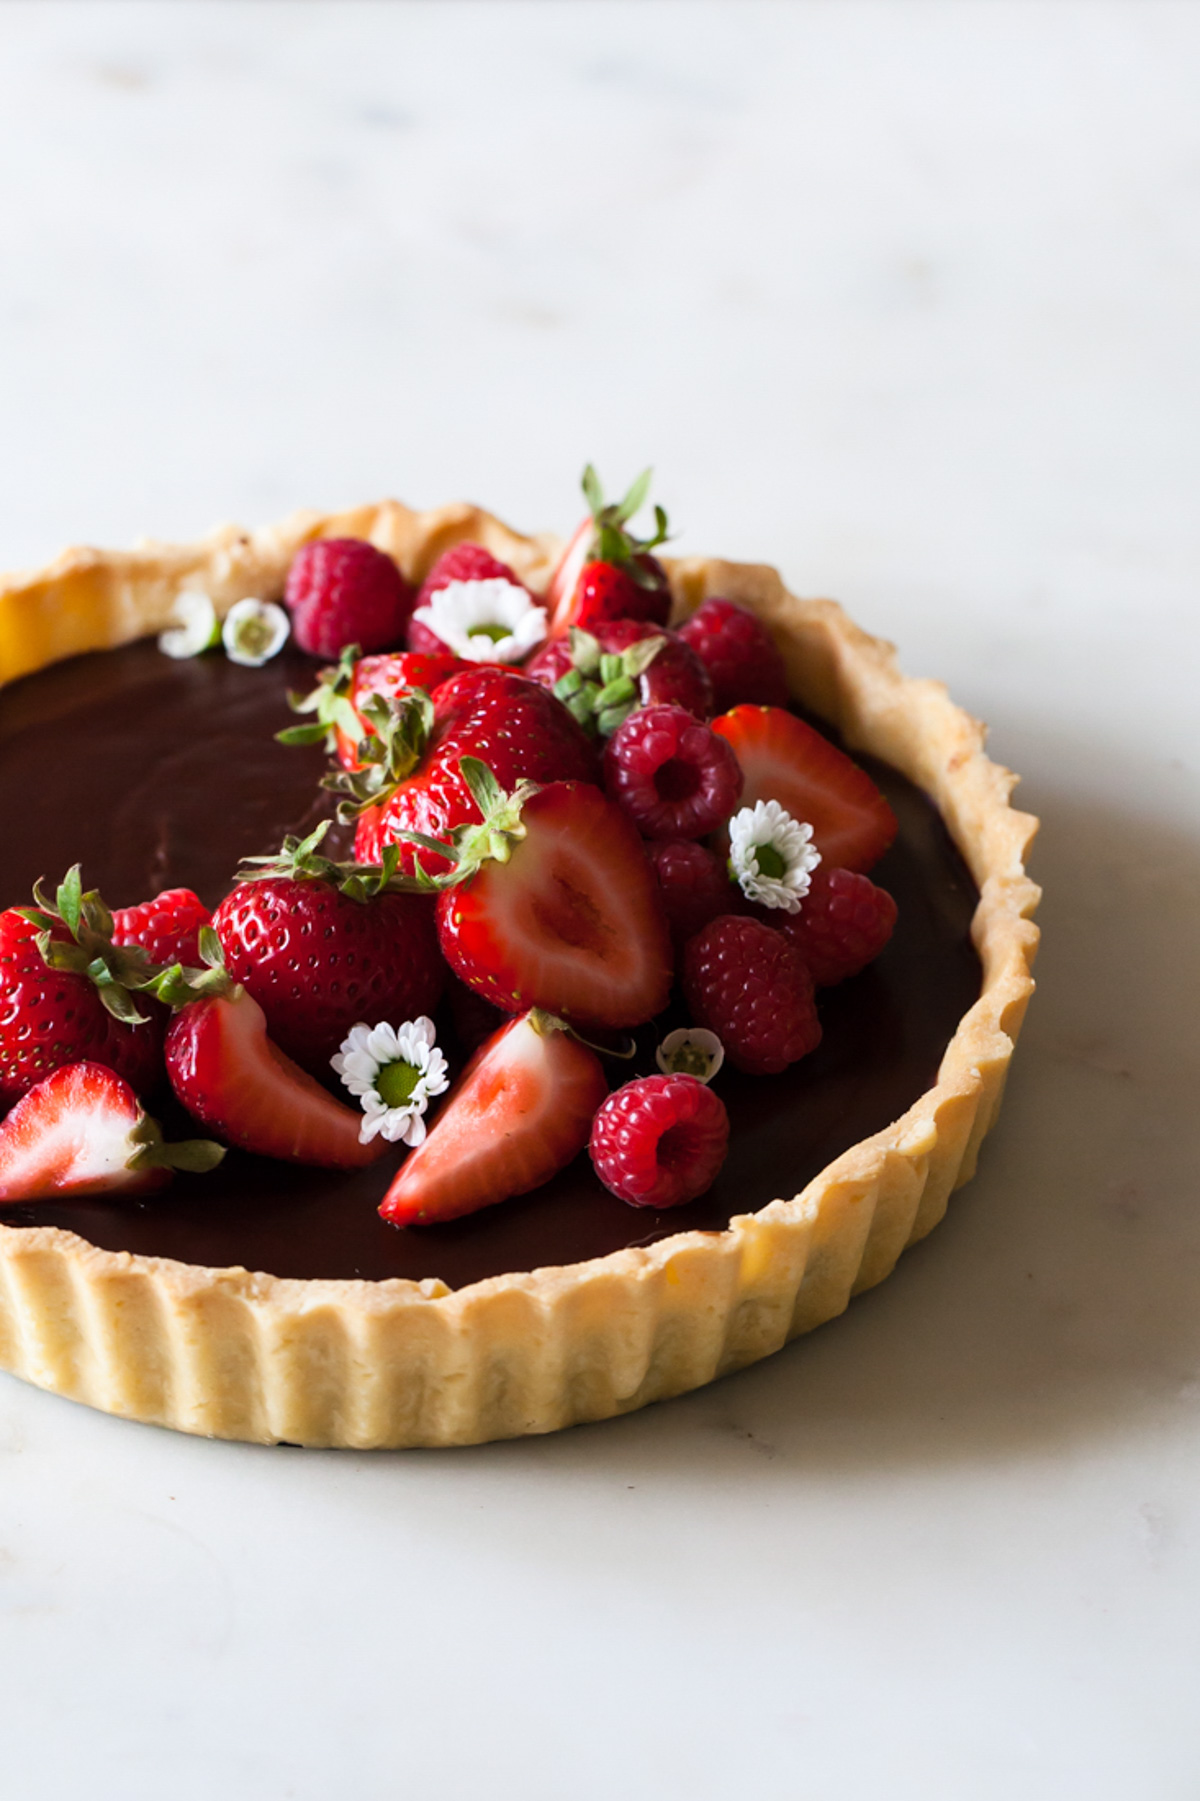 A Chocolate Ganache Tart with fresh raspberries and strawberries on top